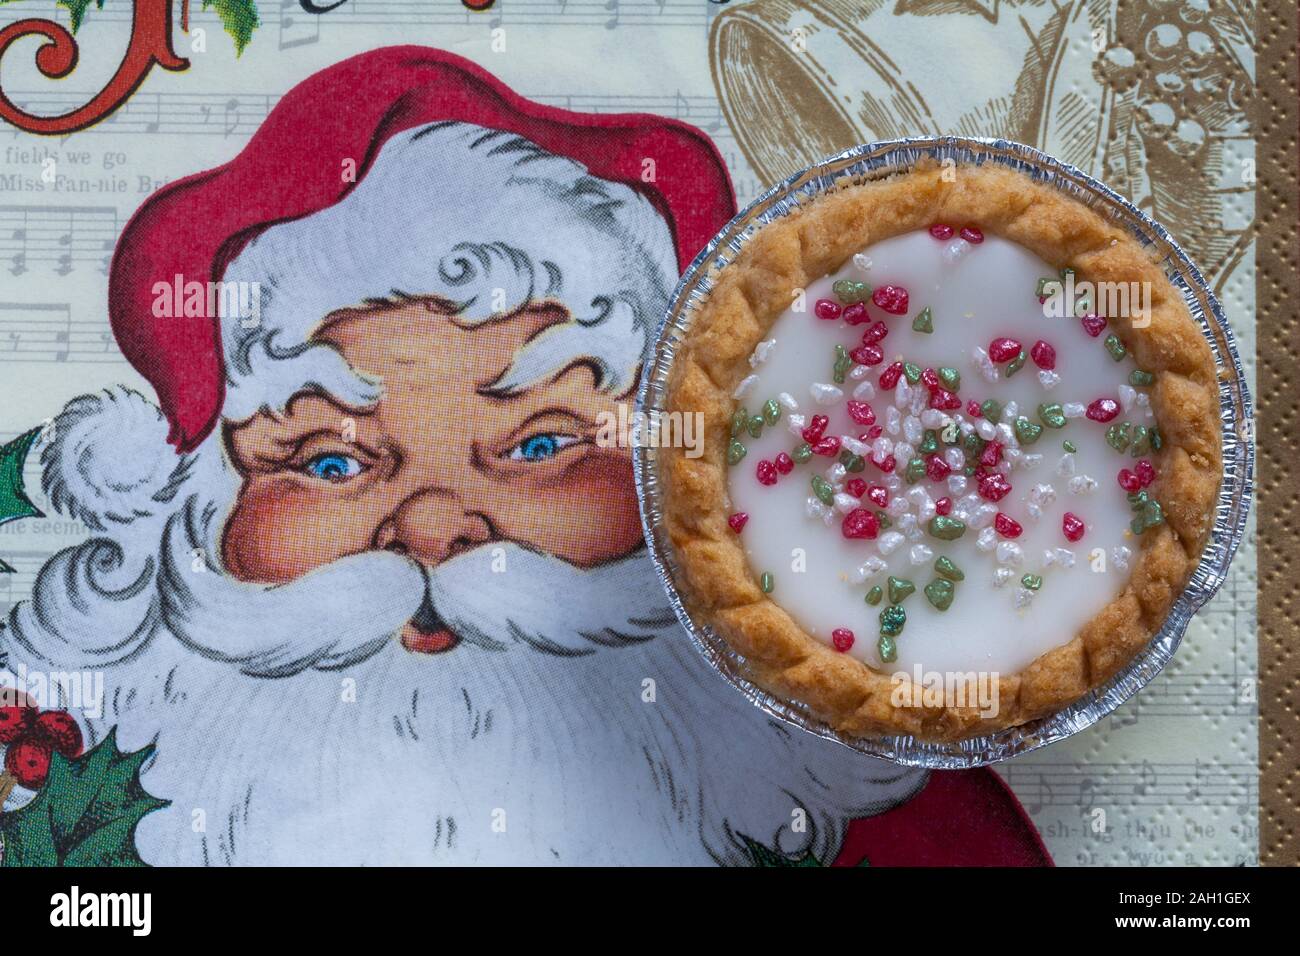 Mr Kipling Festive Bakewells bakewell tart exceedingly good cakes on  Christmas serviette Stock Photo - Alamy